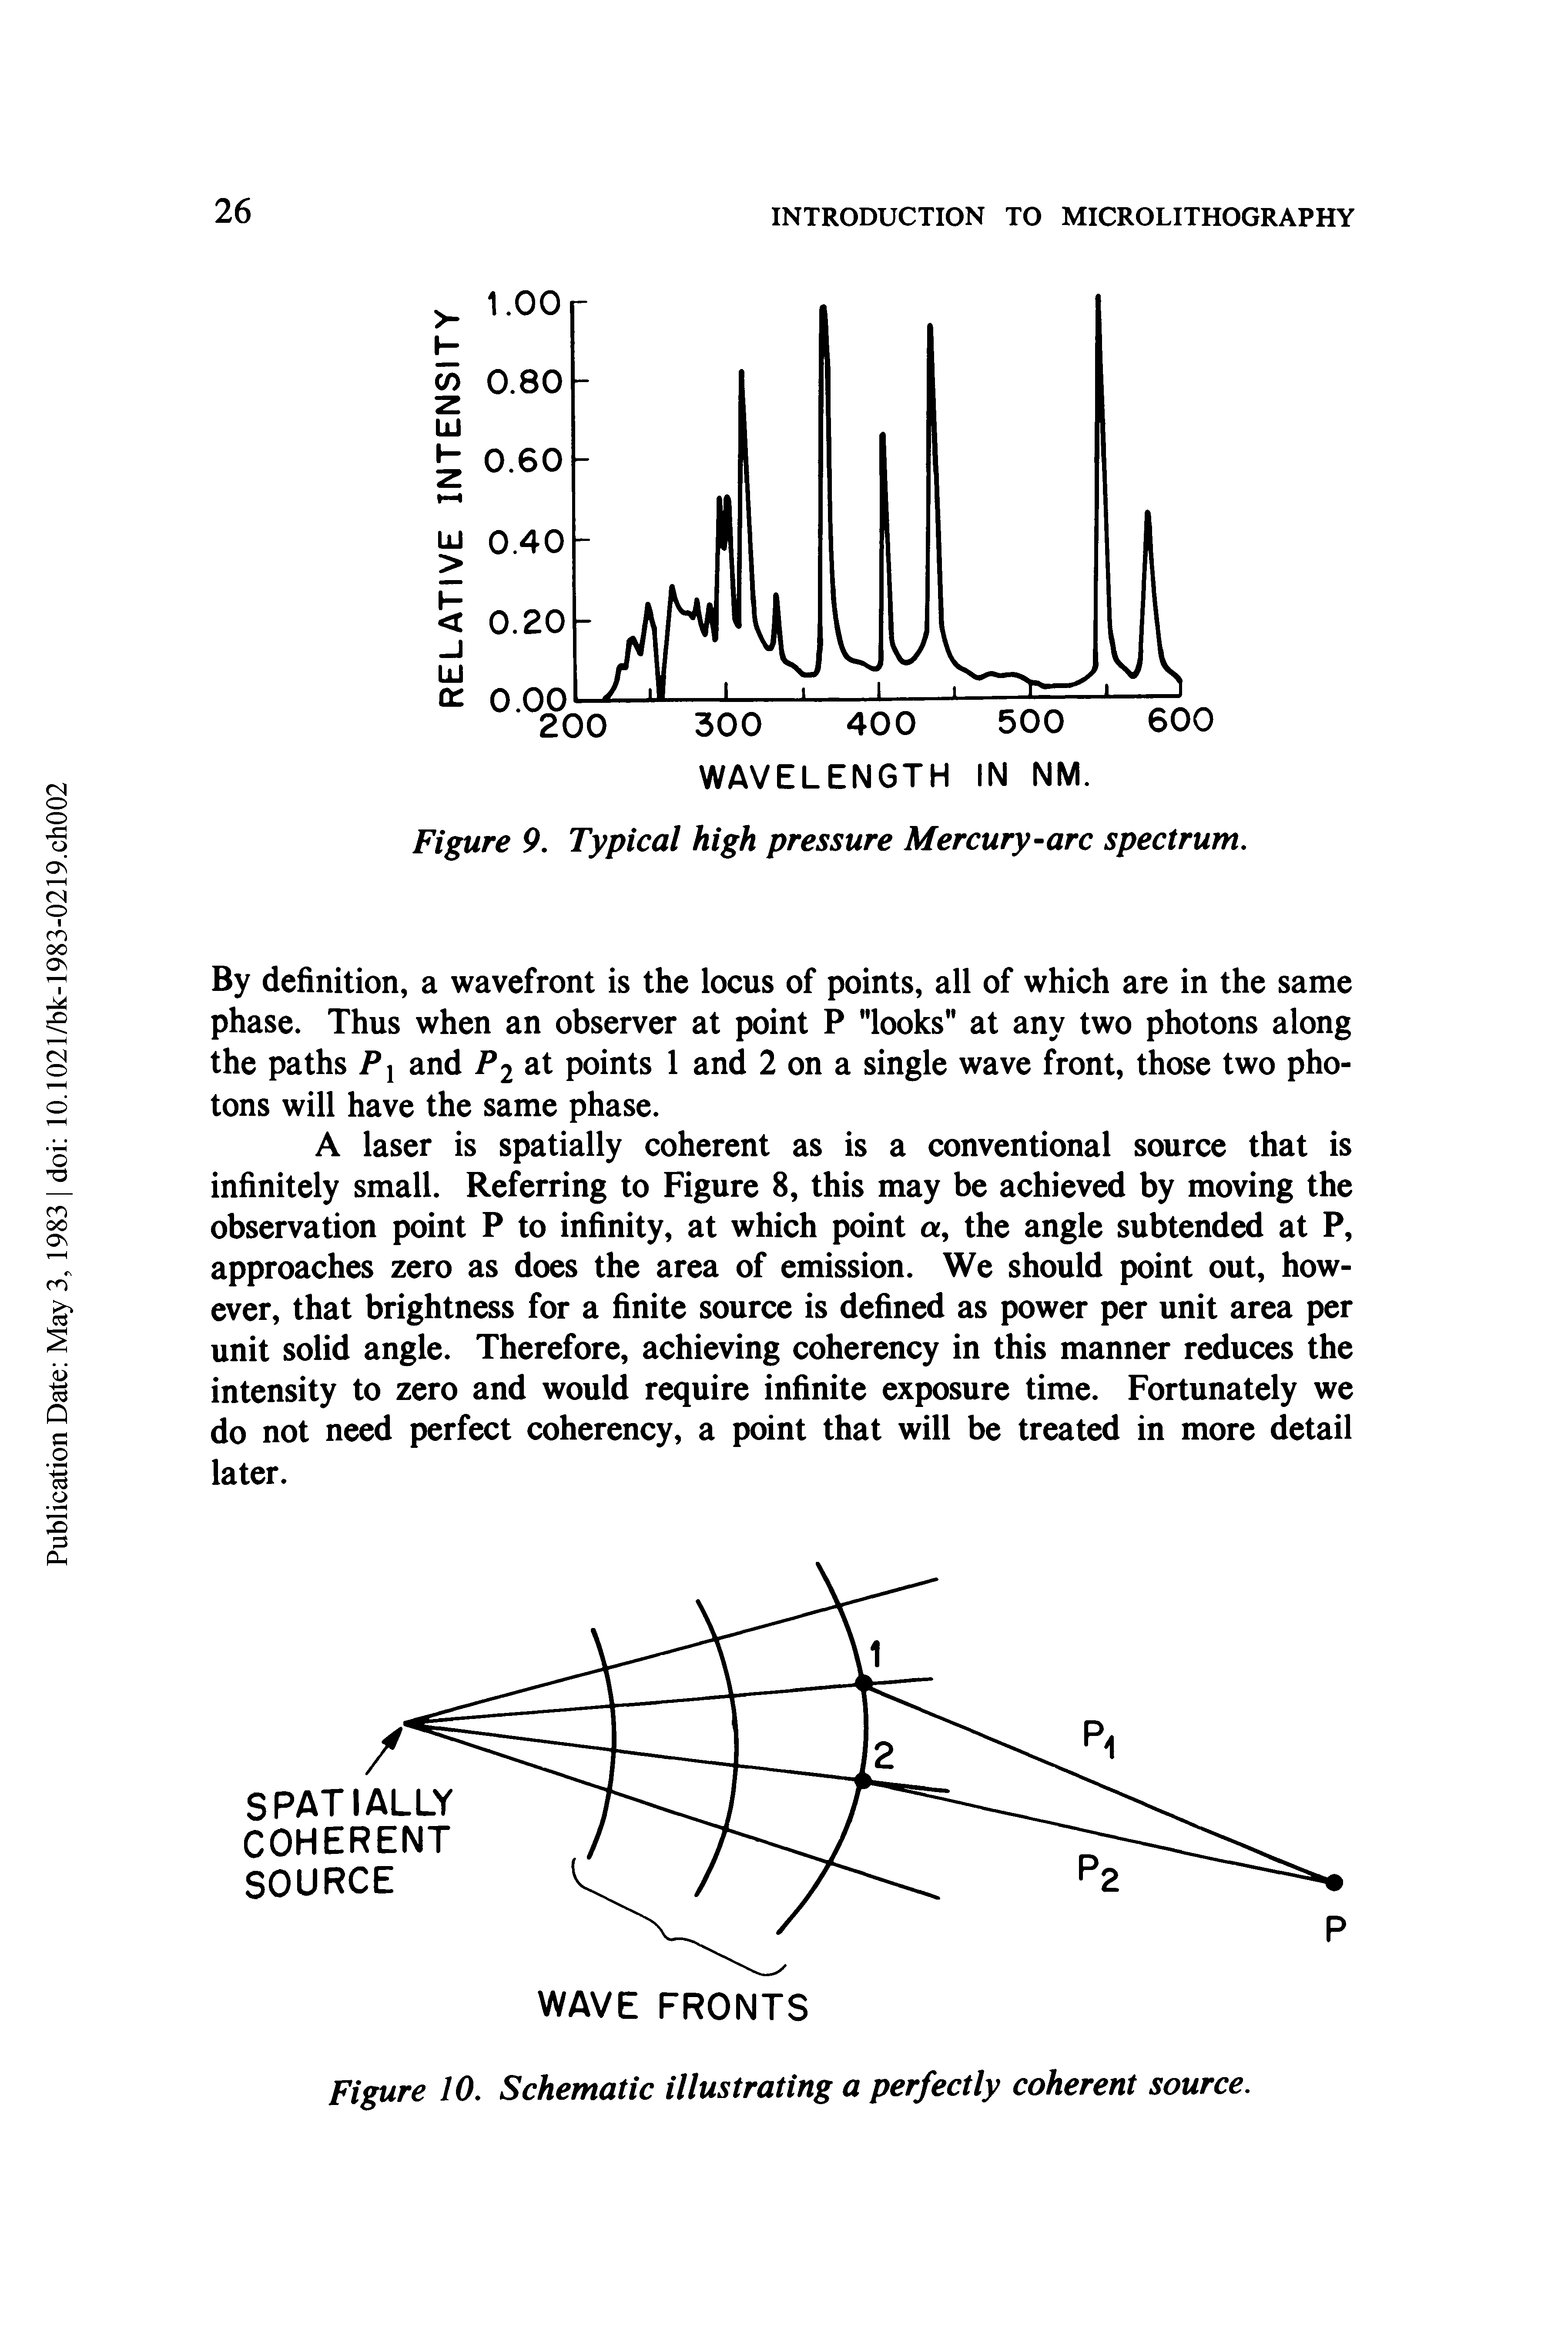 Figure 9. Typical high pressure Mercury-arc spectrum.